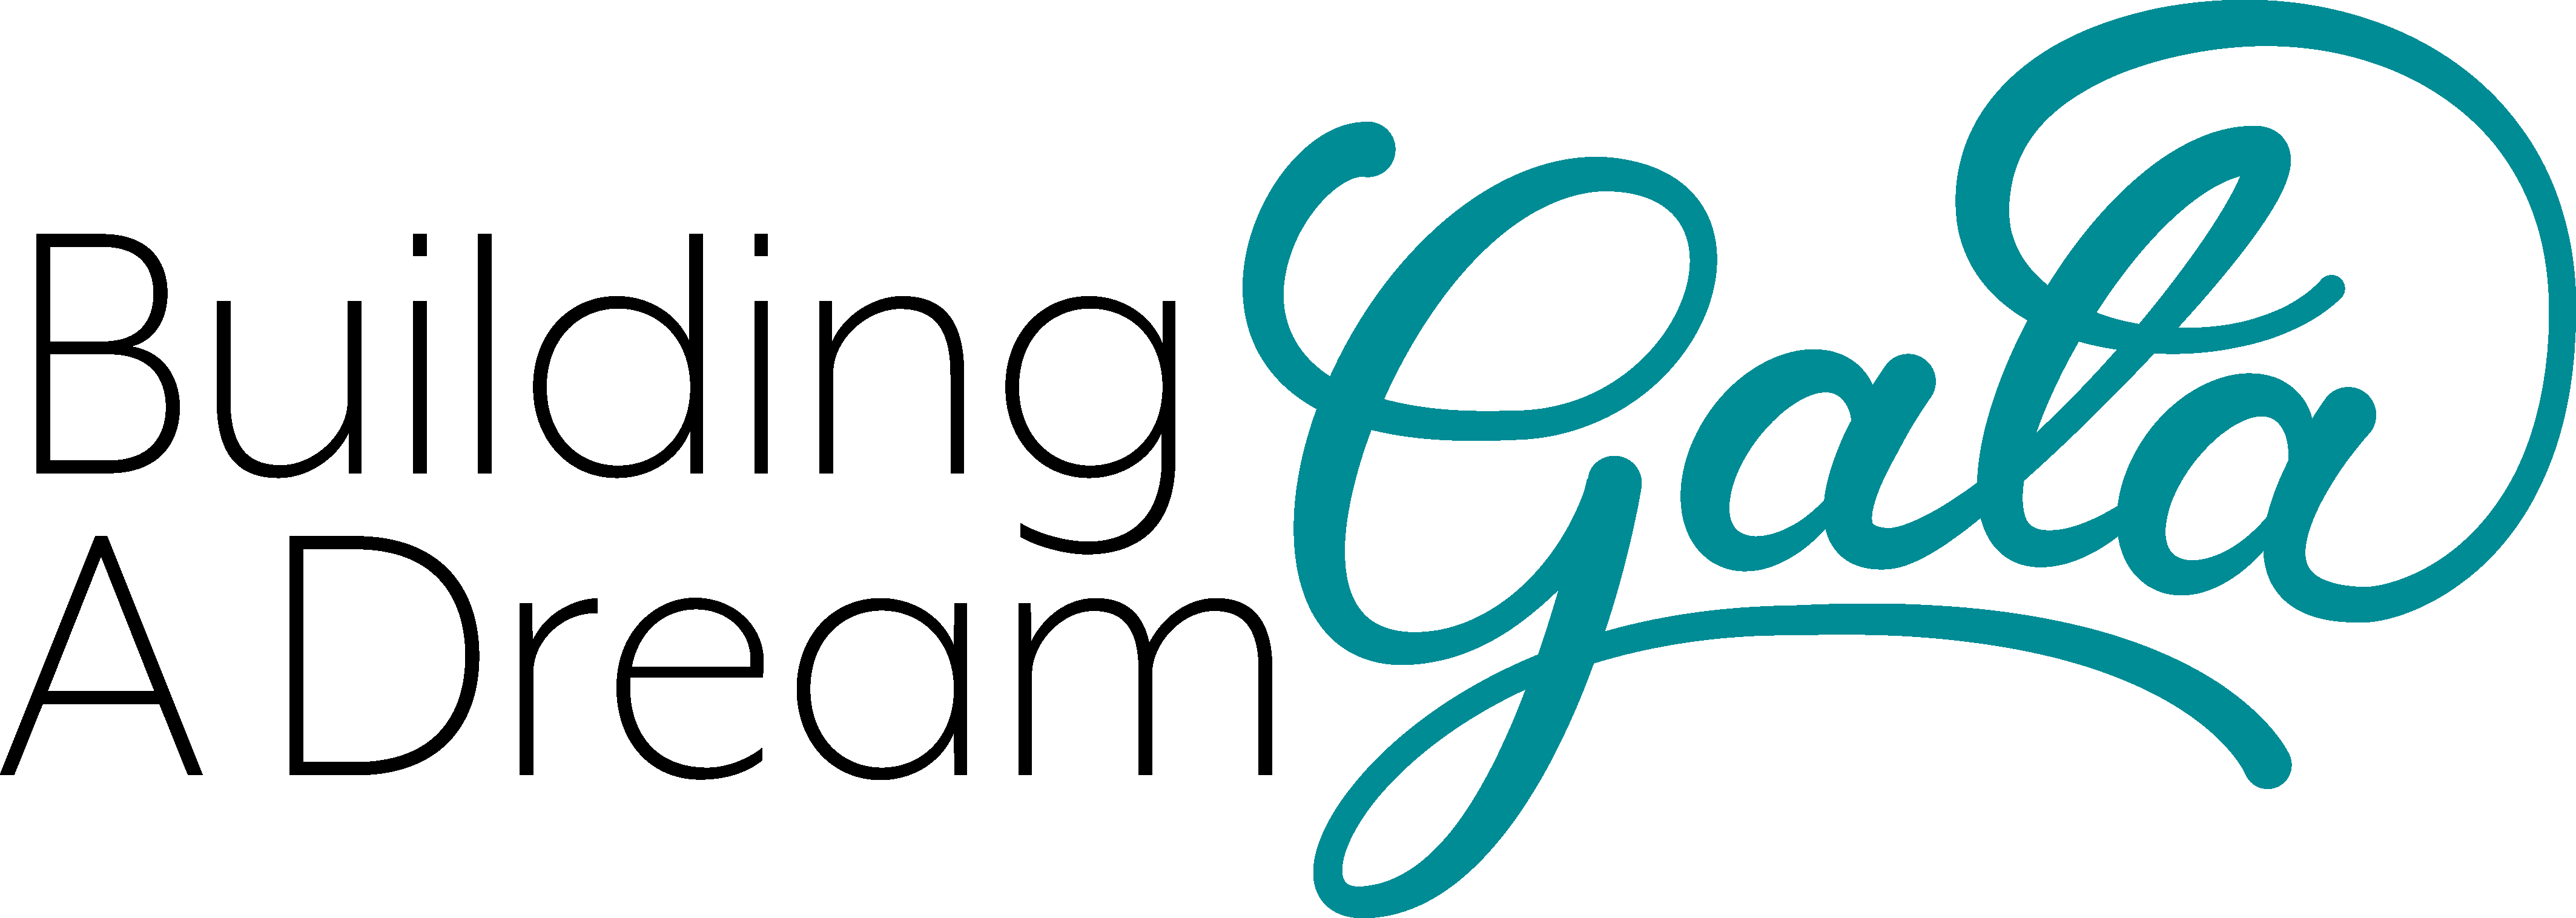 Gala Logo - Building A Dream Gala 2019 | Charles River Center